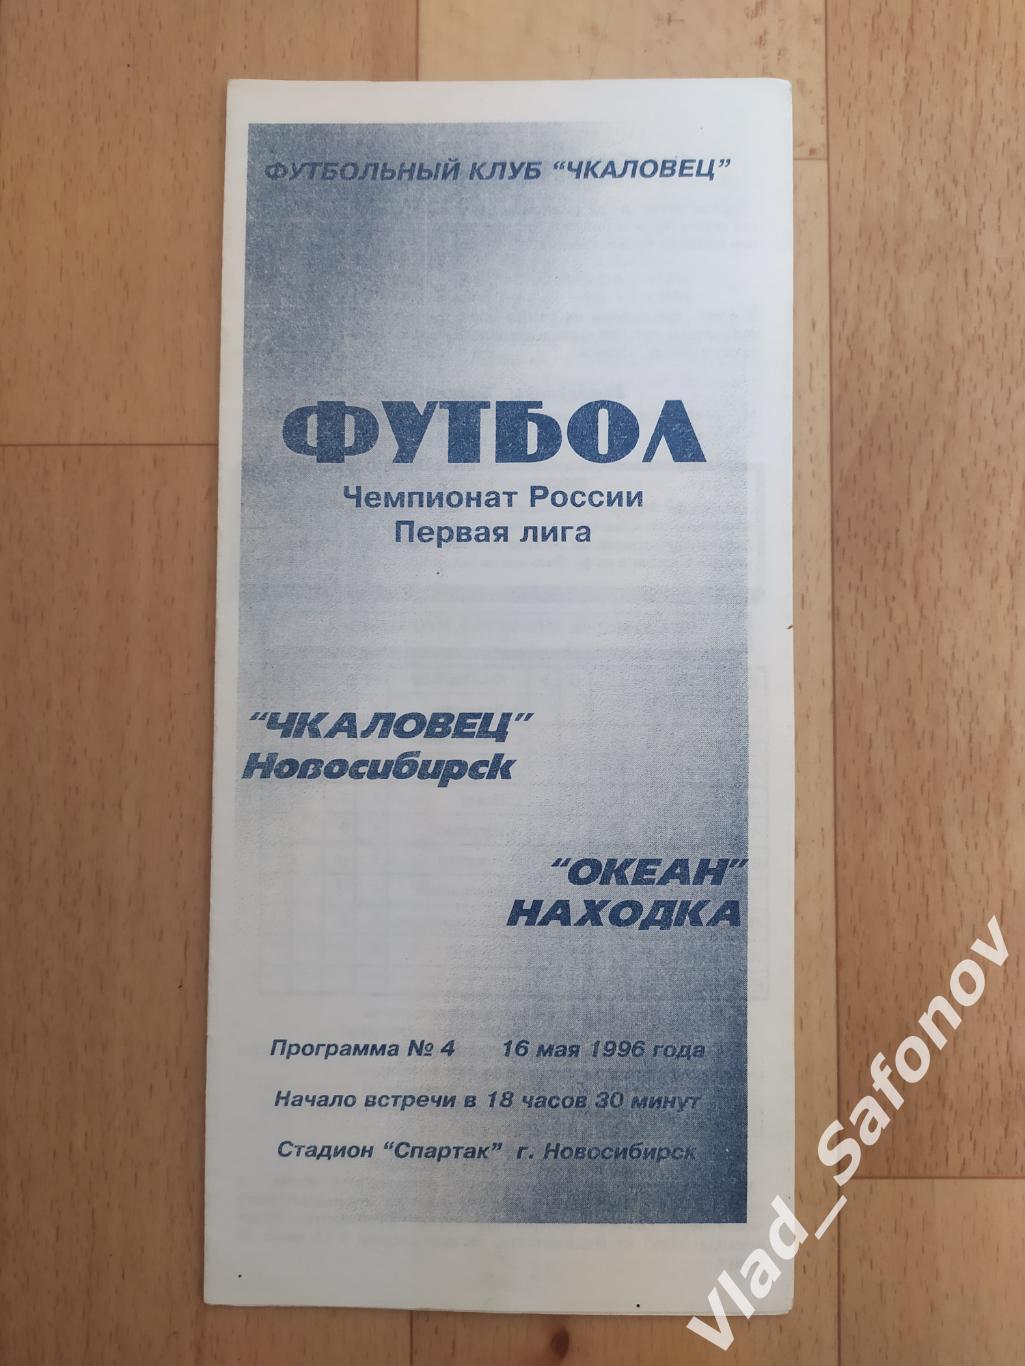 Чкаловец(Новосибирск) - Океан(Находка). 1 лига. 16/05/1996